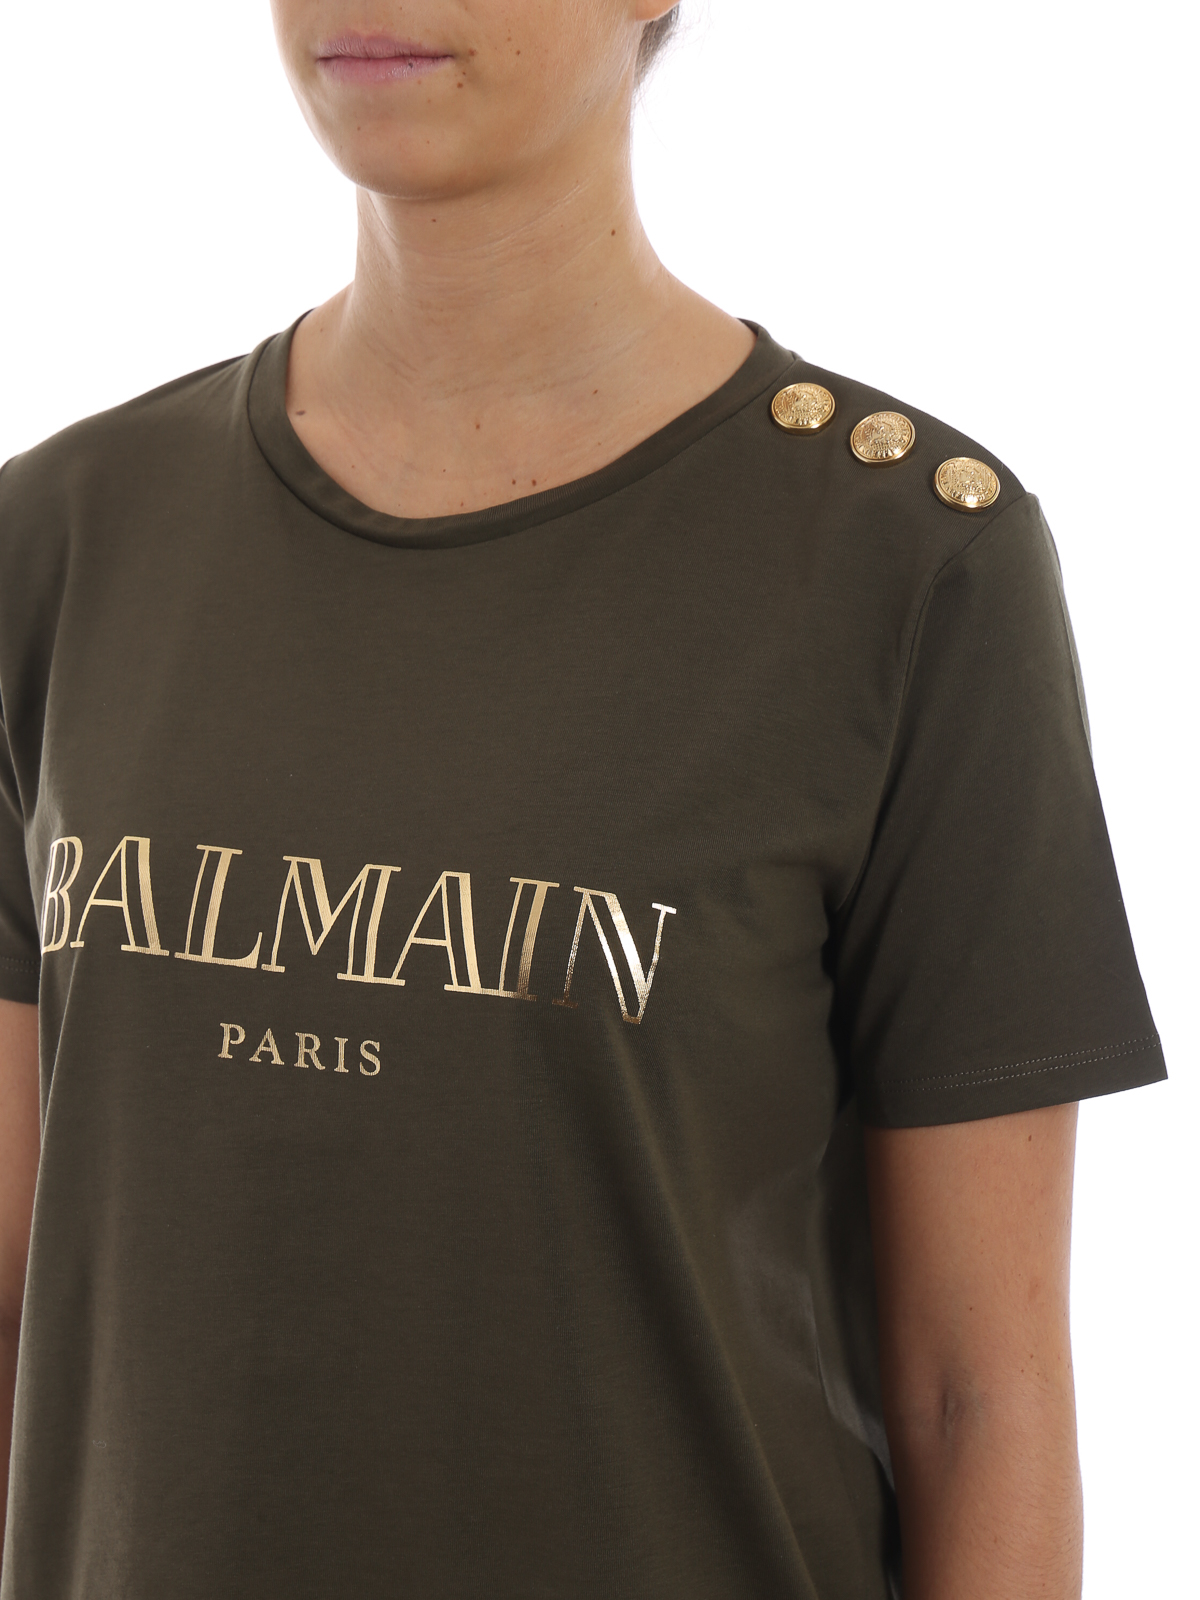 samtale Smadre Duke T-shirts Balmain - Balmain print army green cotton T-shirt -  18H158030326IC3690